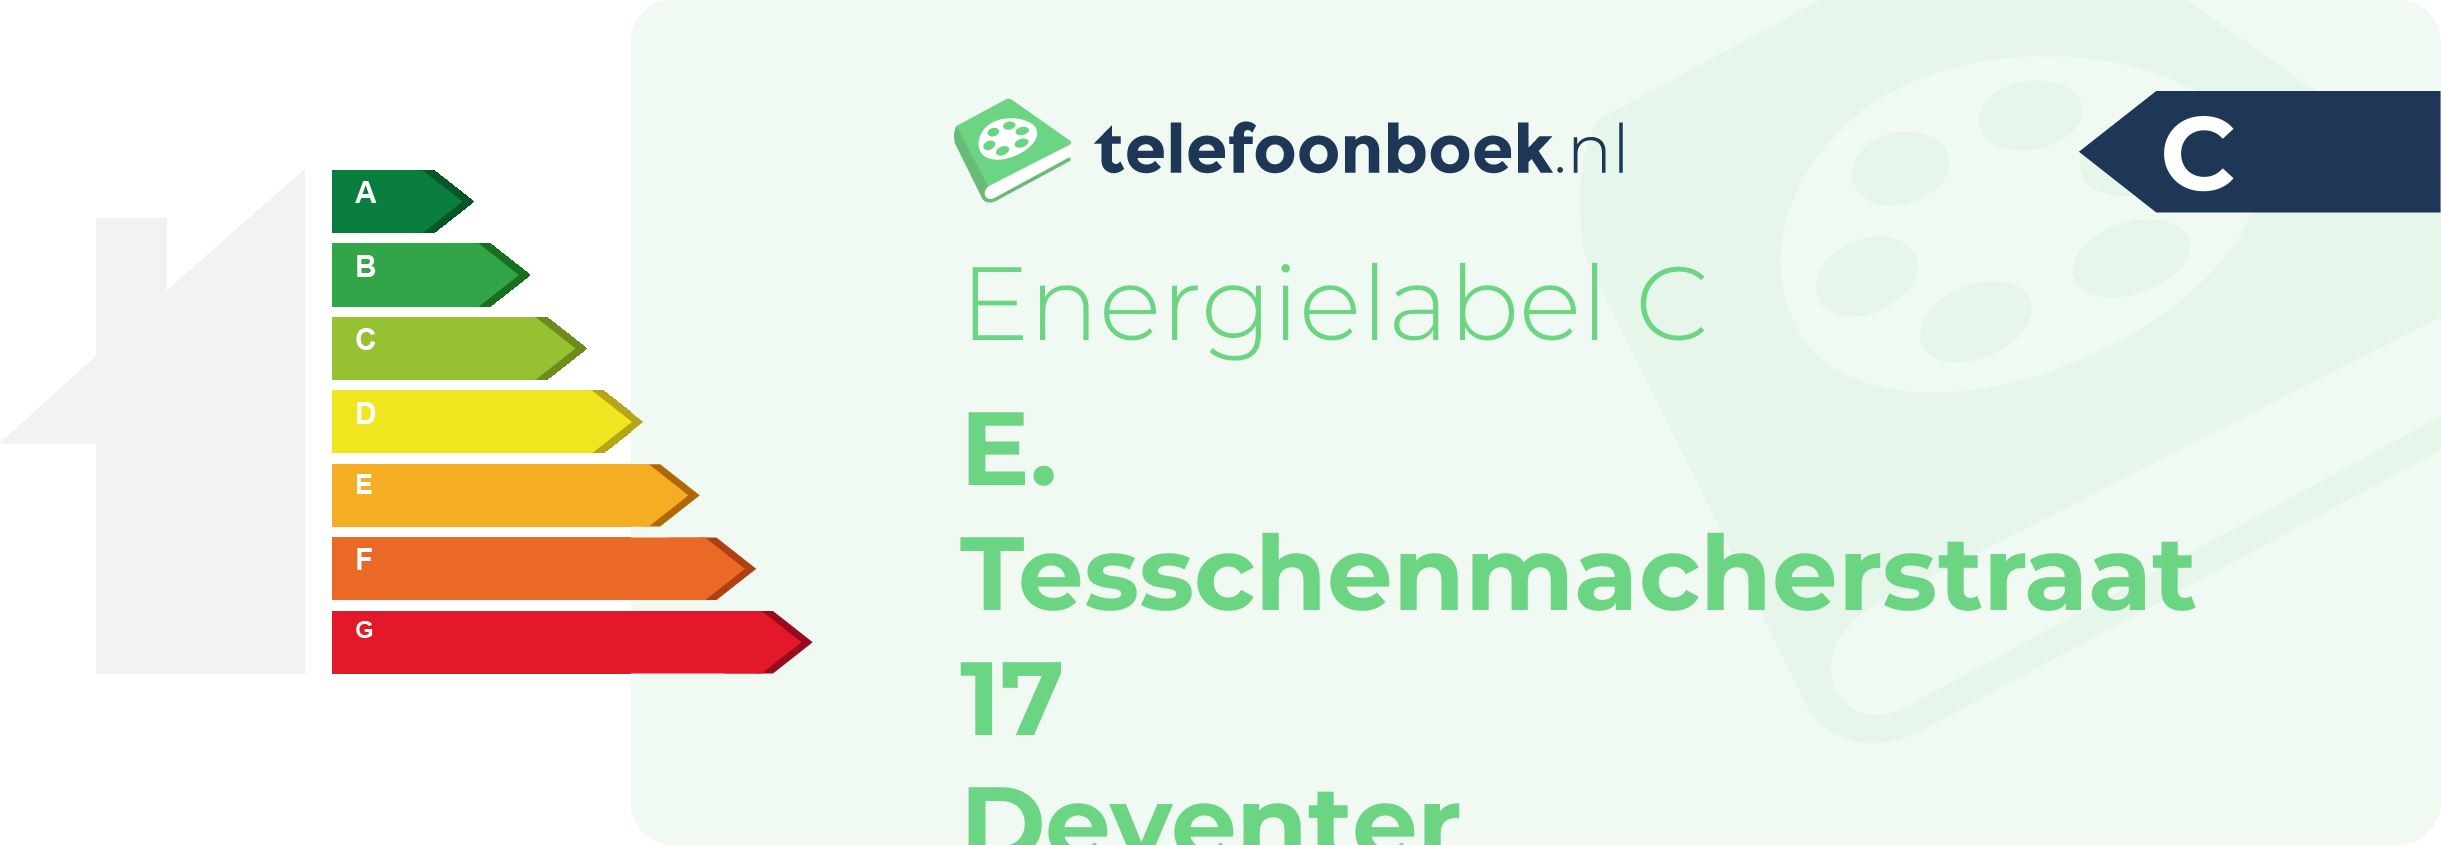 Energielabel E. Tesschenmacherstraat 17 Deventer